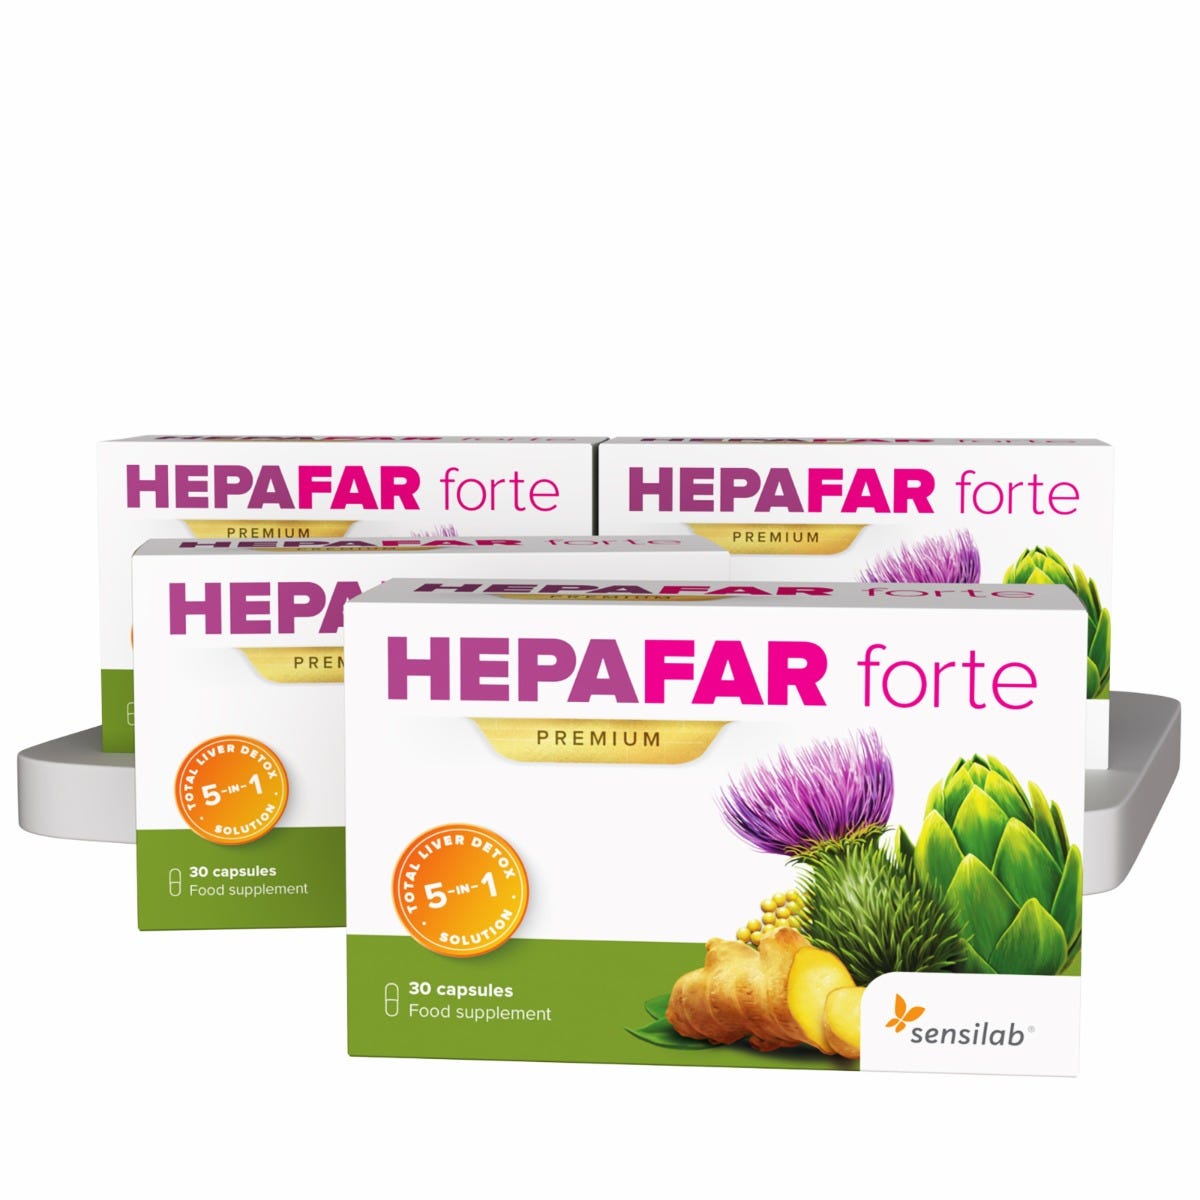 Hepafar forte 4er Pack (2 Monatspaket) Mariendistel Kapseln - 100% natürliche Leberentgiftung | Innovative Formel - 10x stärkere Wirkung | Sensilab.